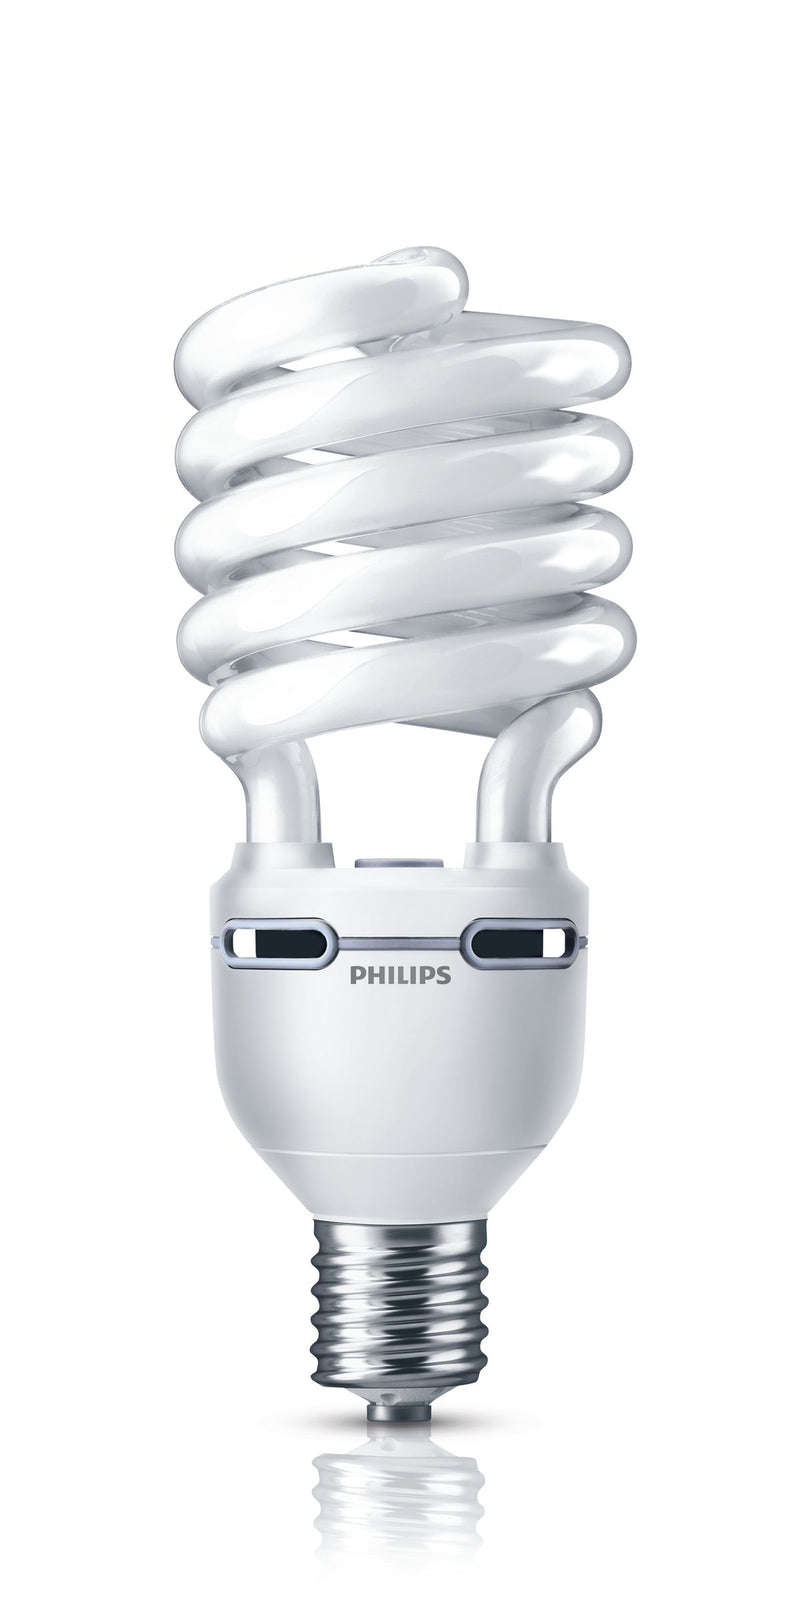 fenomeen Haalbaarheid Productiviteit Philips Tornado High Lumen Spaarlamp E40 - 75W (340W) - Daglicht - Nie